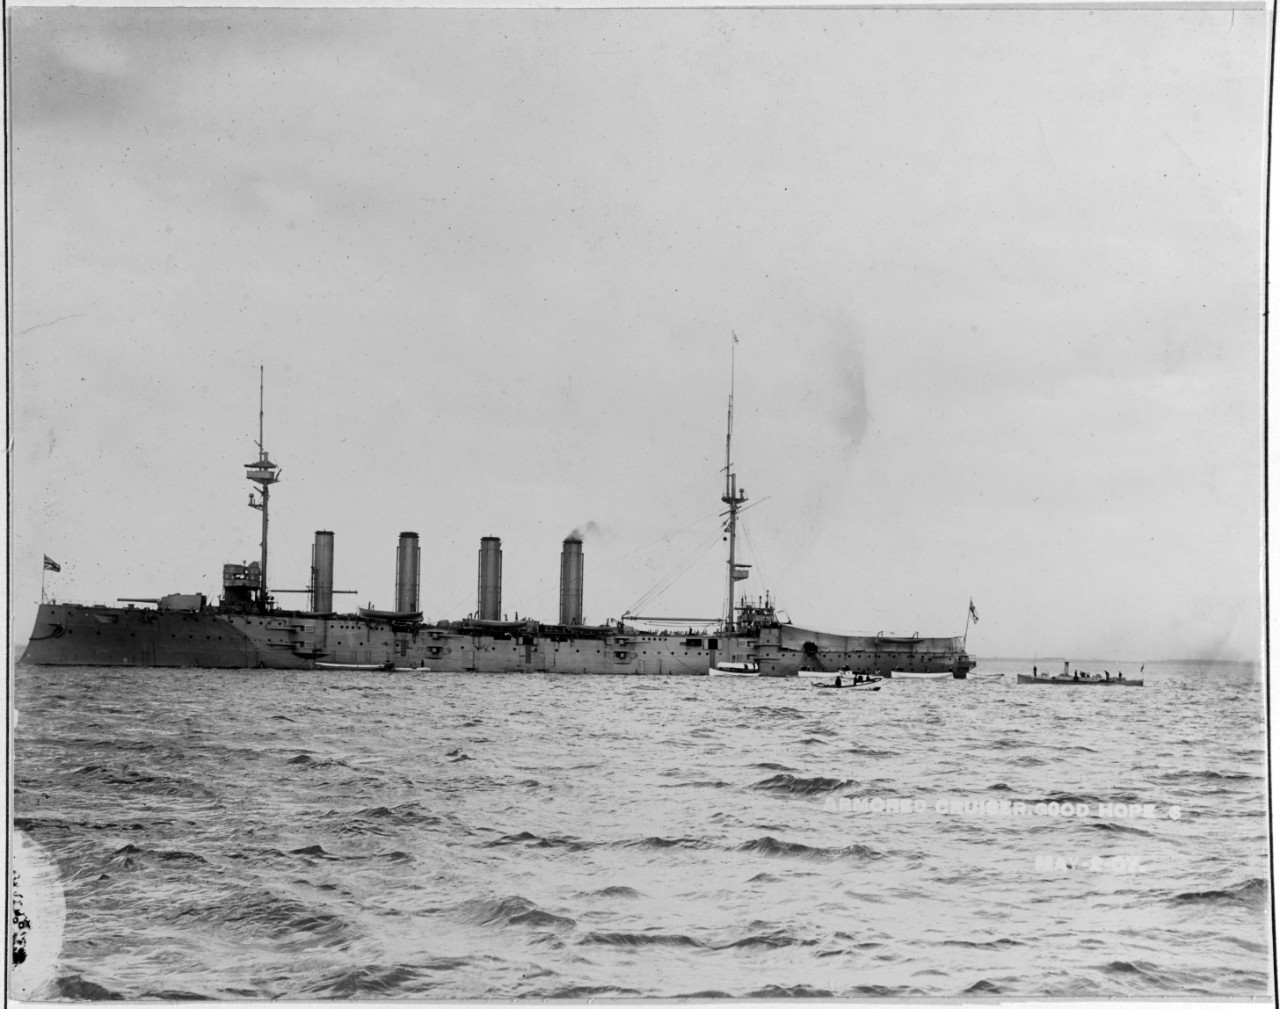 HMS GOOD HOPE (British armored cruiser, 1901)